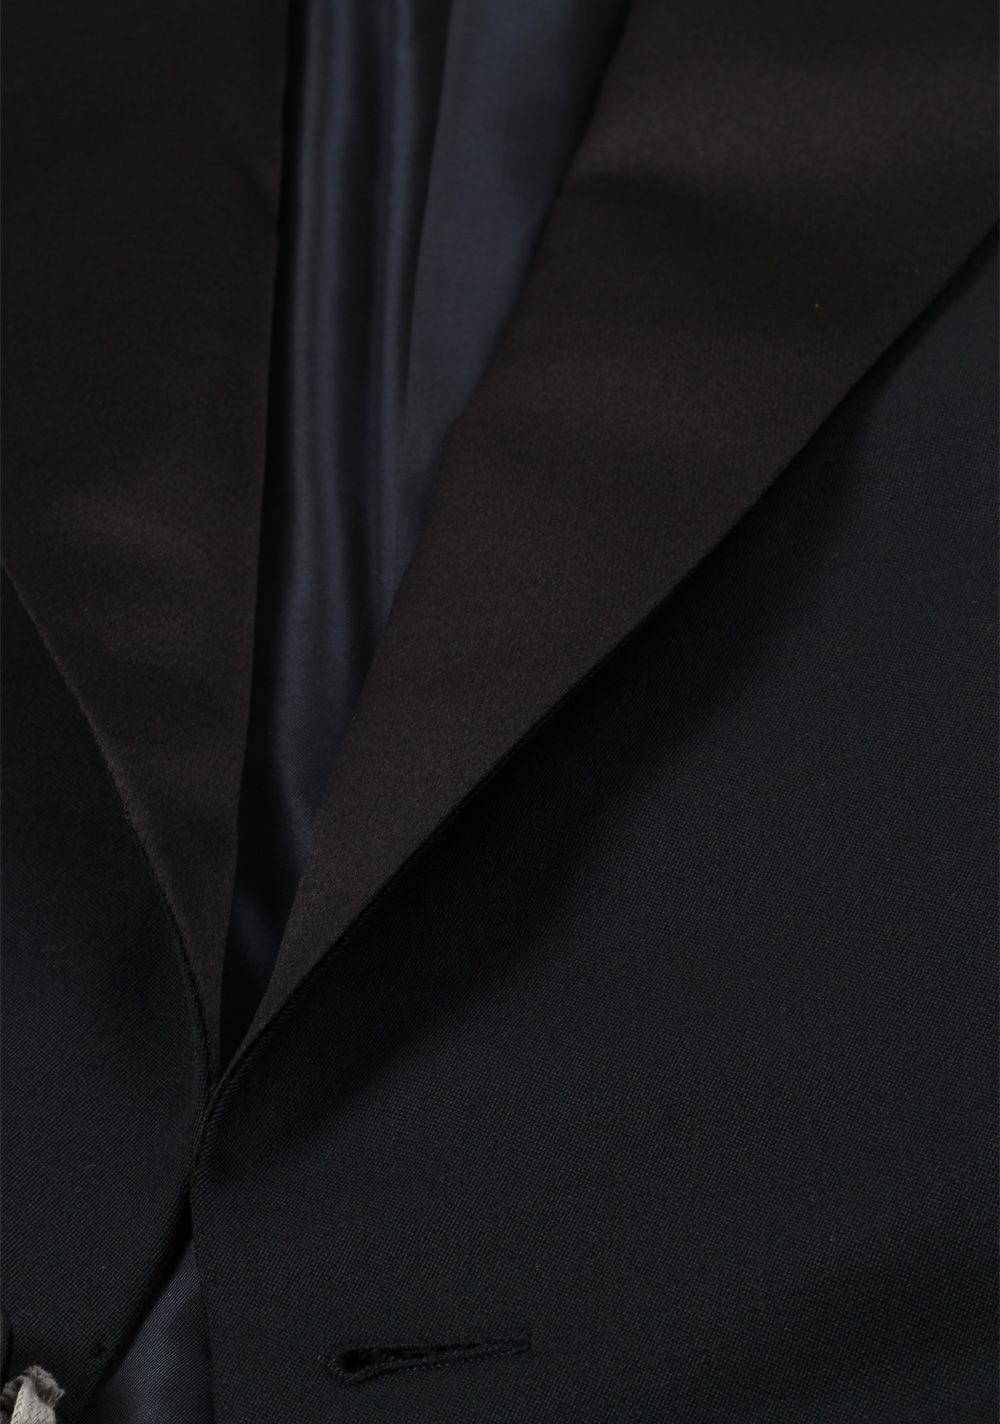 TOM FORD Windsor Black Tuxedo Smoking Suit | Costume Limité